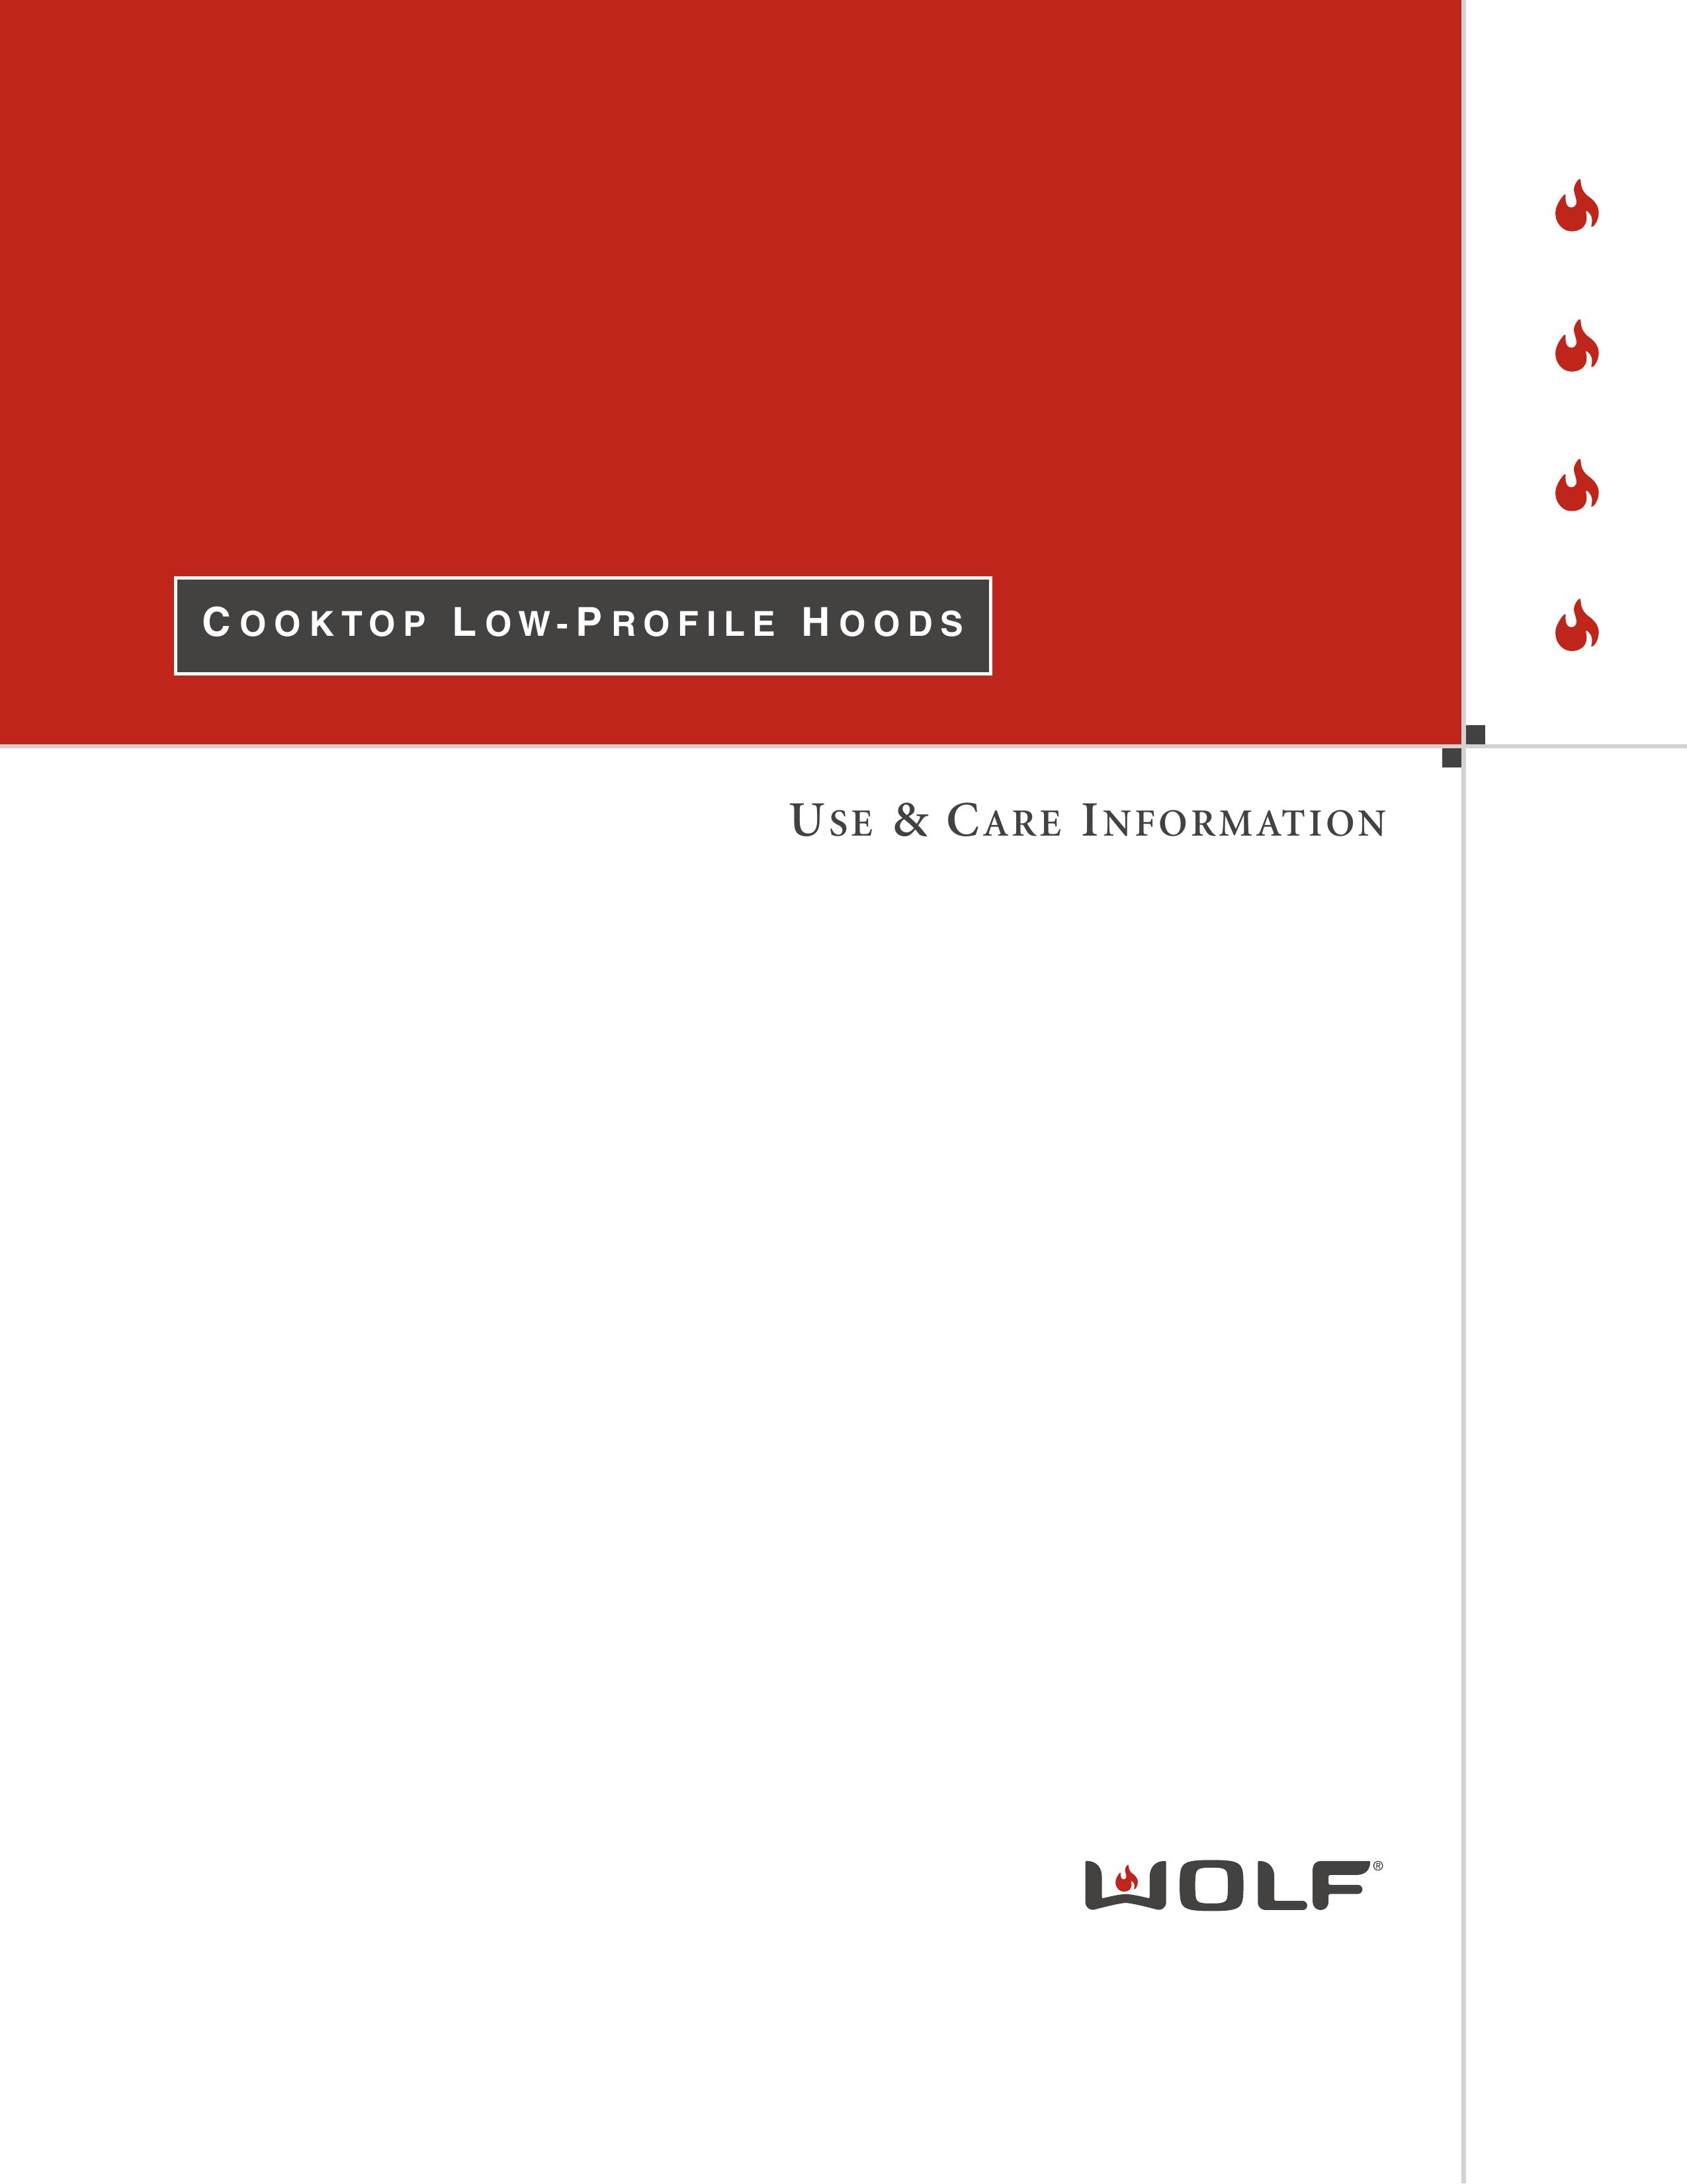 Wolf CTEWH45 Ventilation Hood User Manual